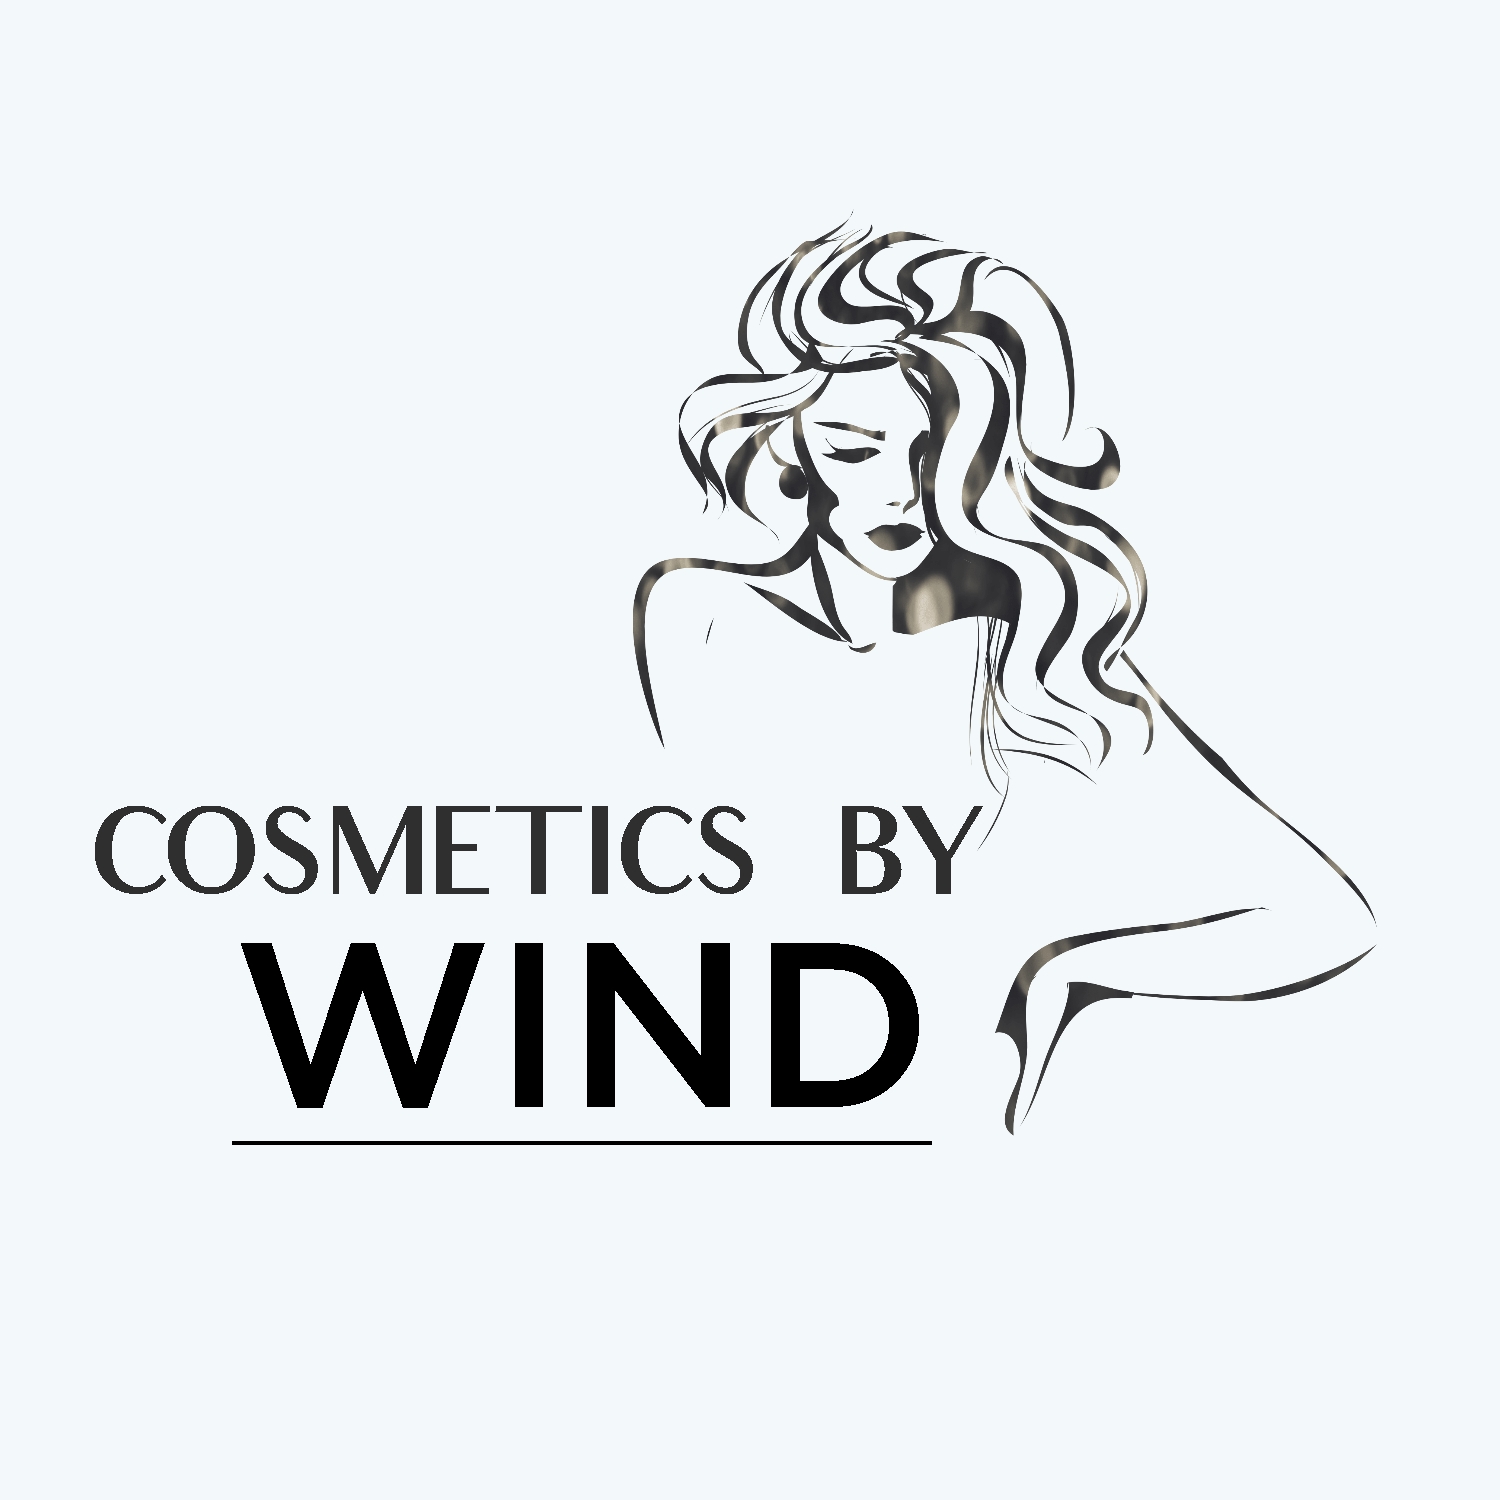 Cosmetics by wind logo